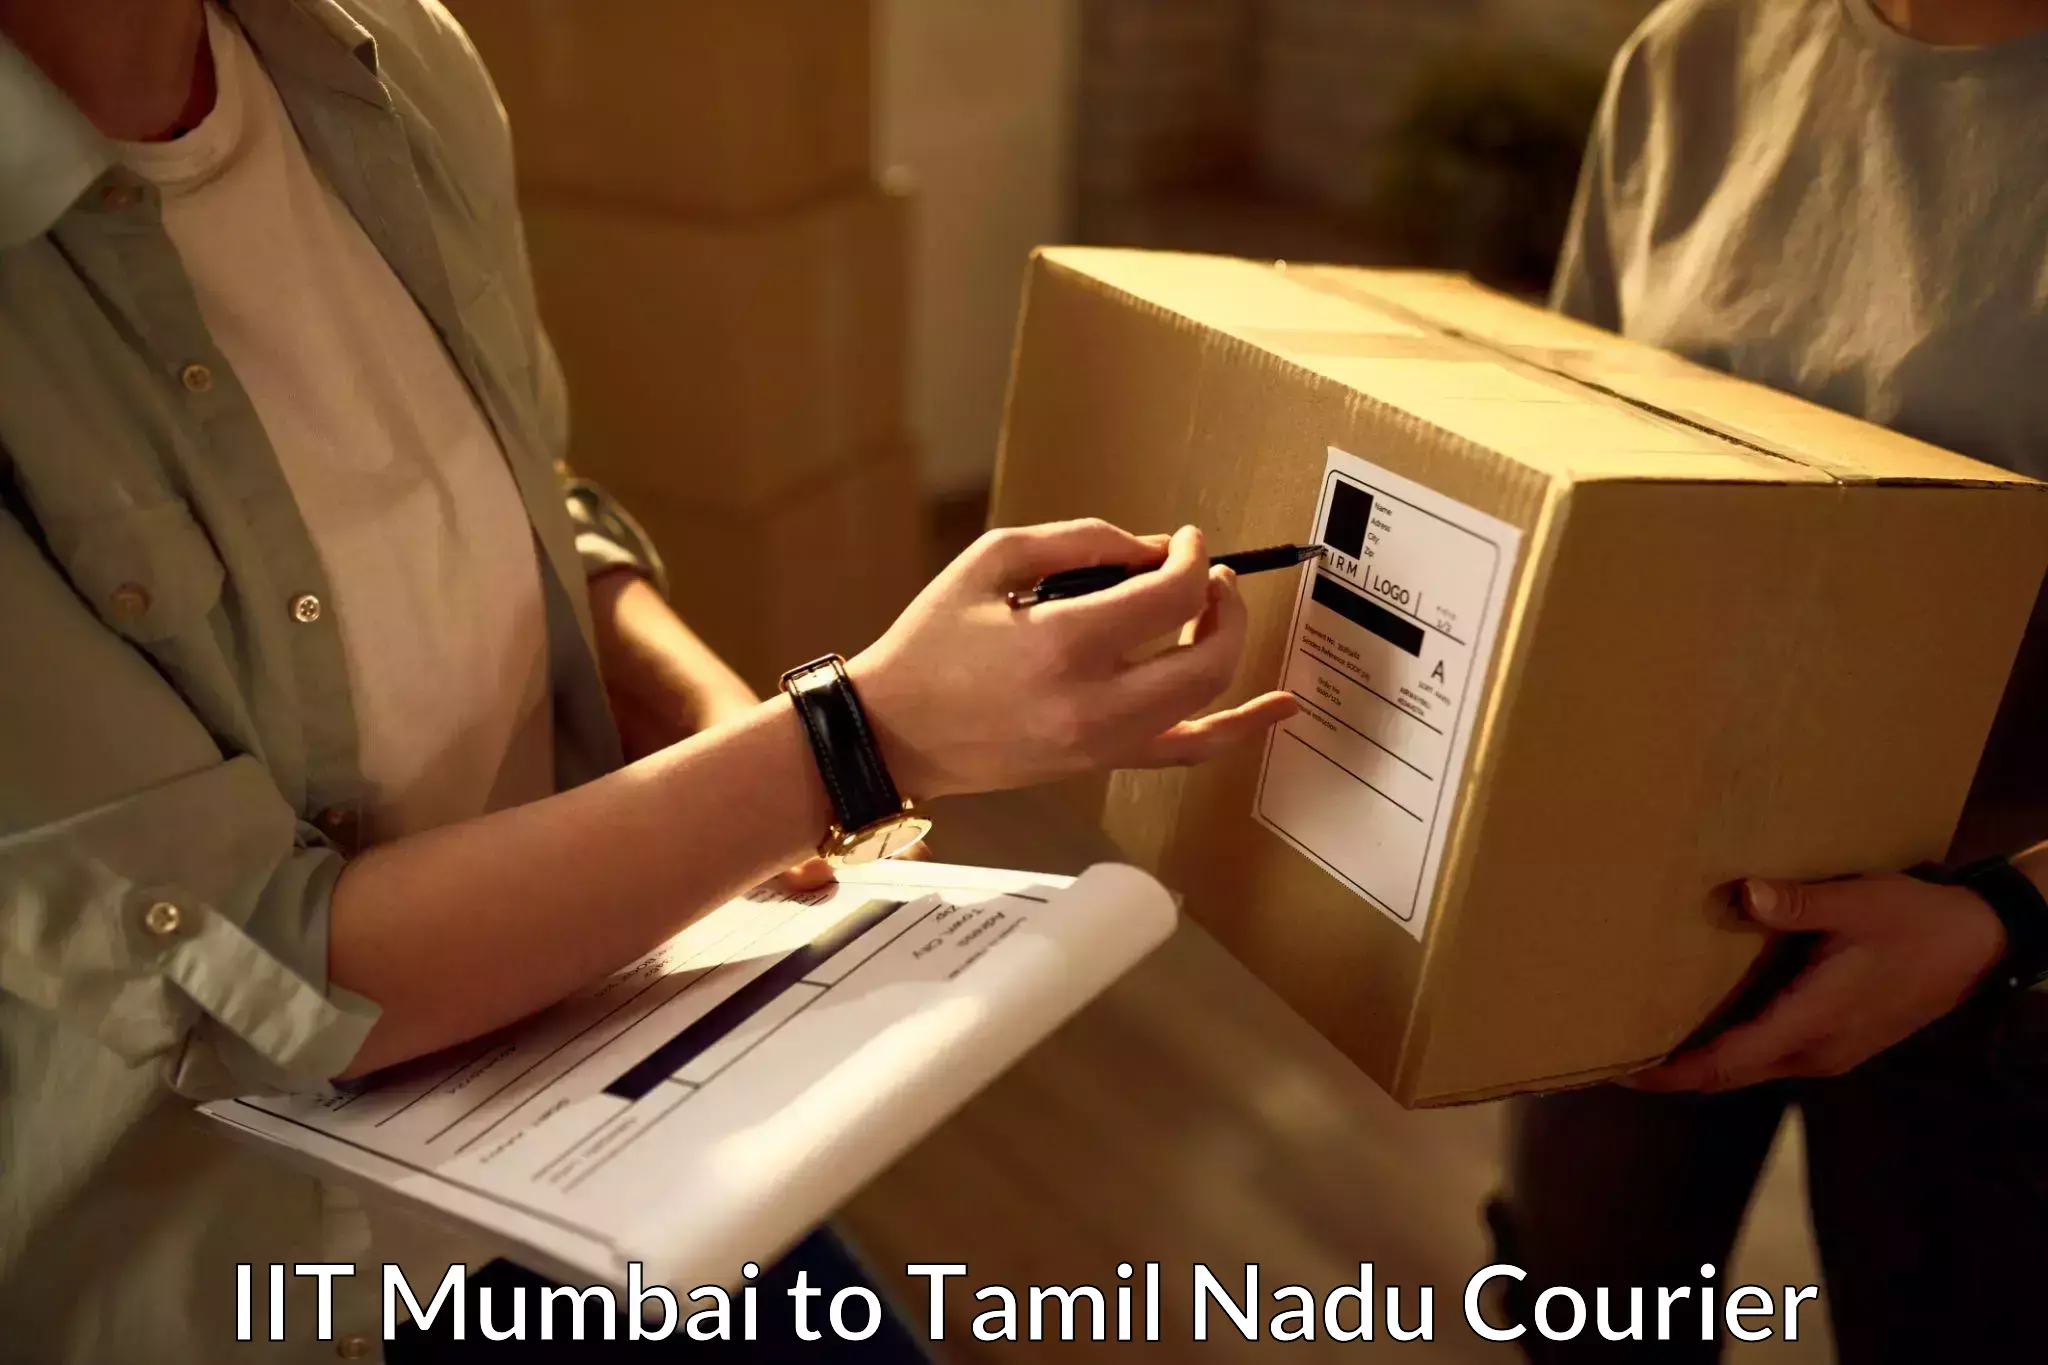 On-call courier service IIT Mumbai to Avadi